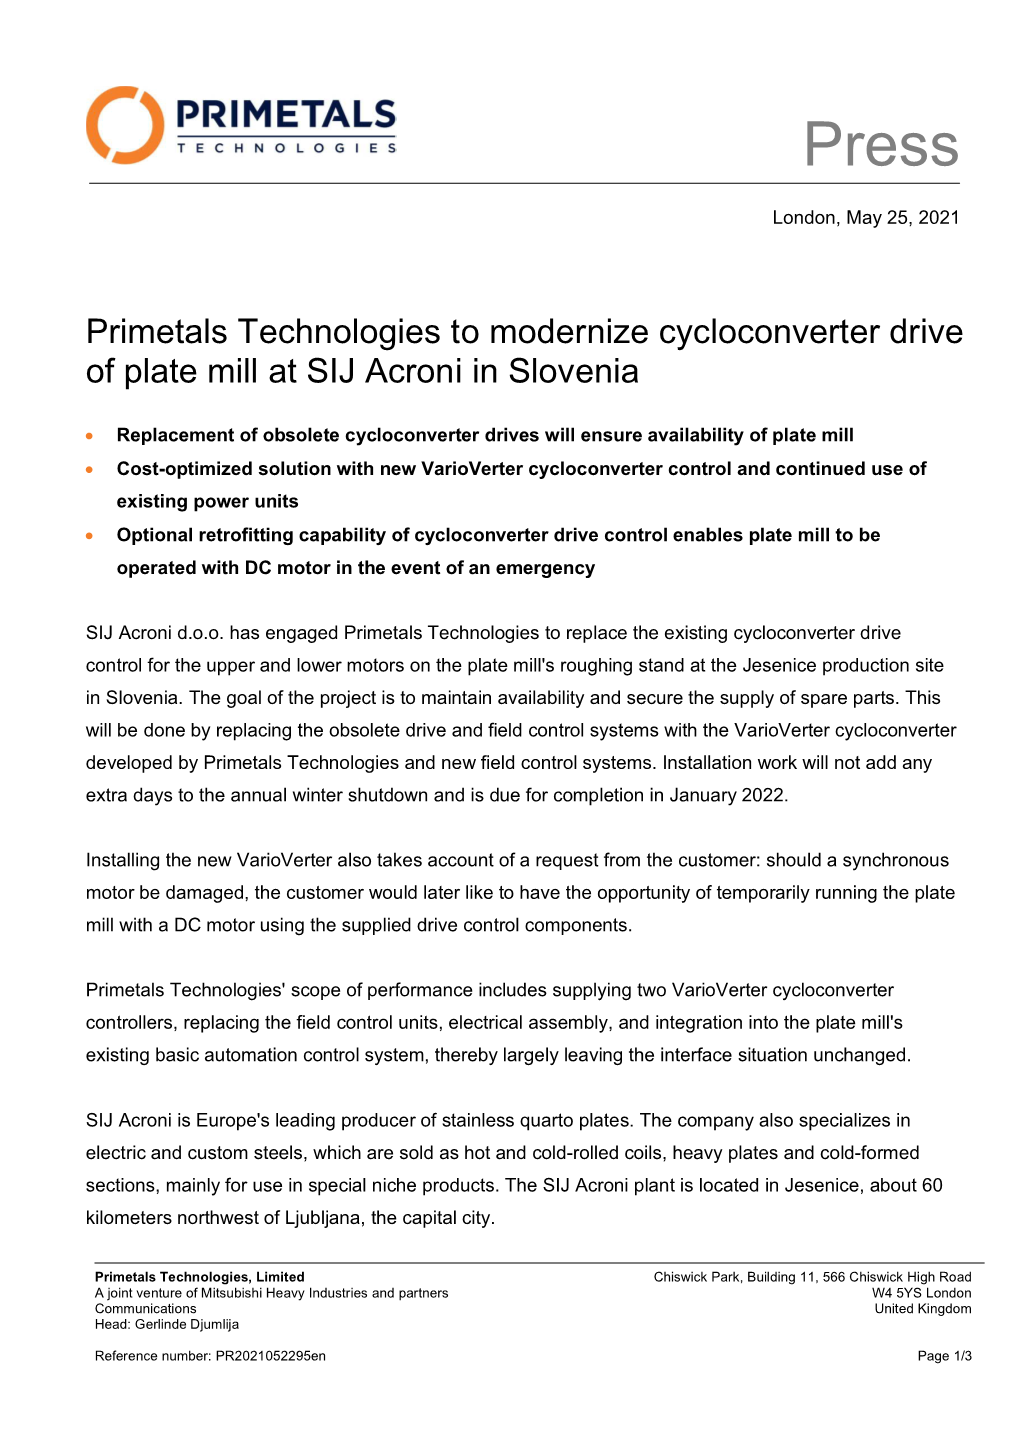 Primetals Technologies to Modernize Cycloconverter Drive of Plate Mill at SIJ Acroni in Slovenia